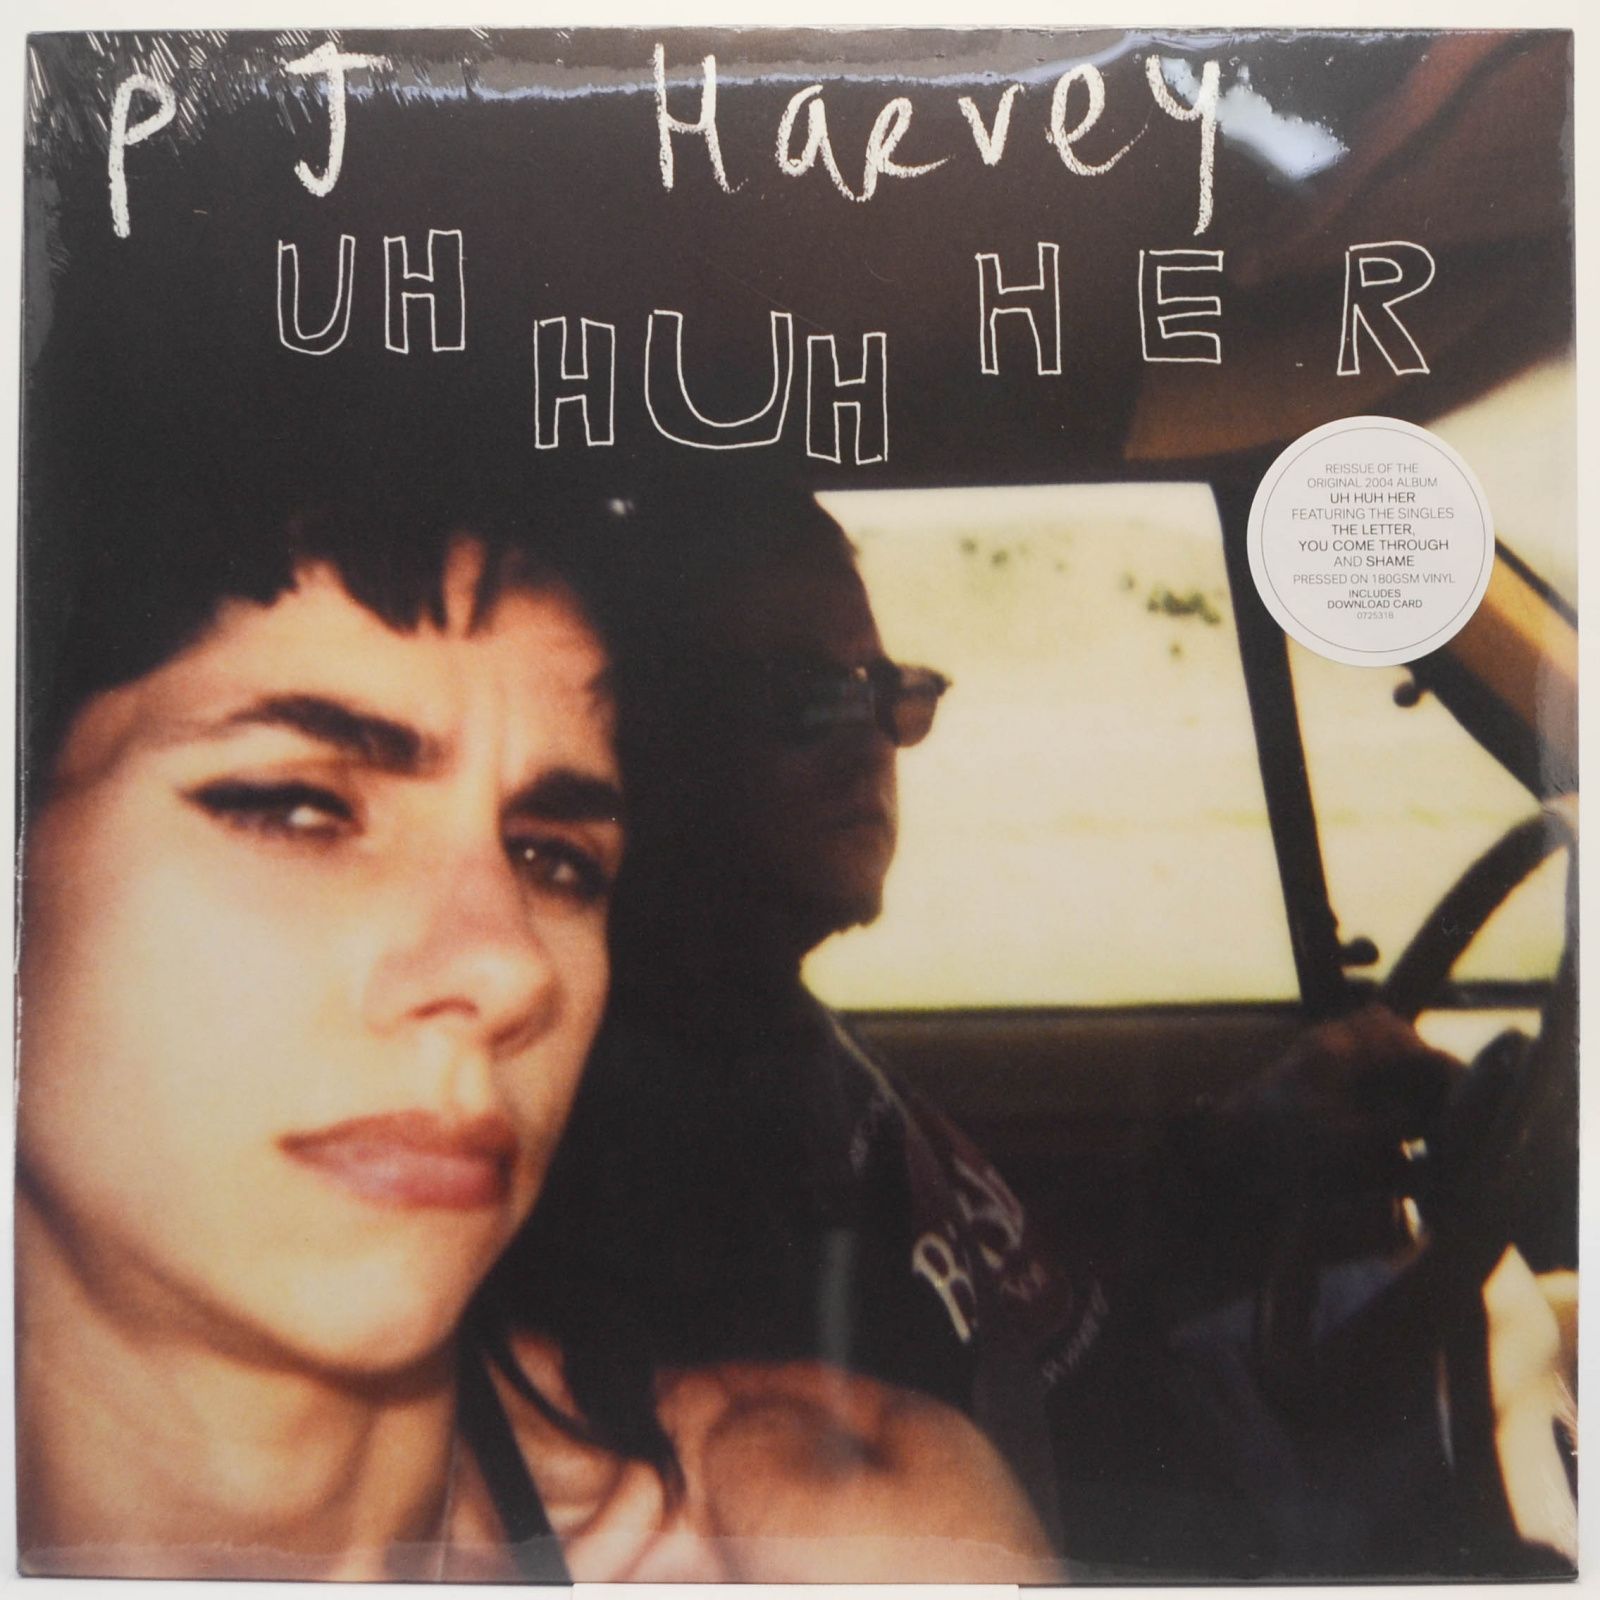 PJ Harvey — Uh Huh Her, 2021